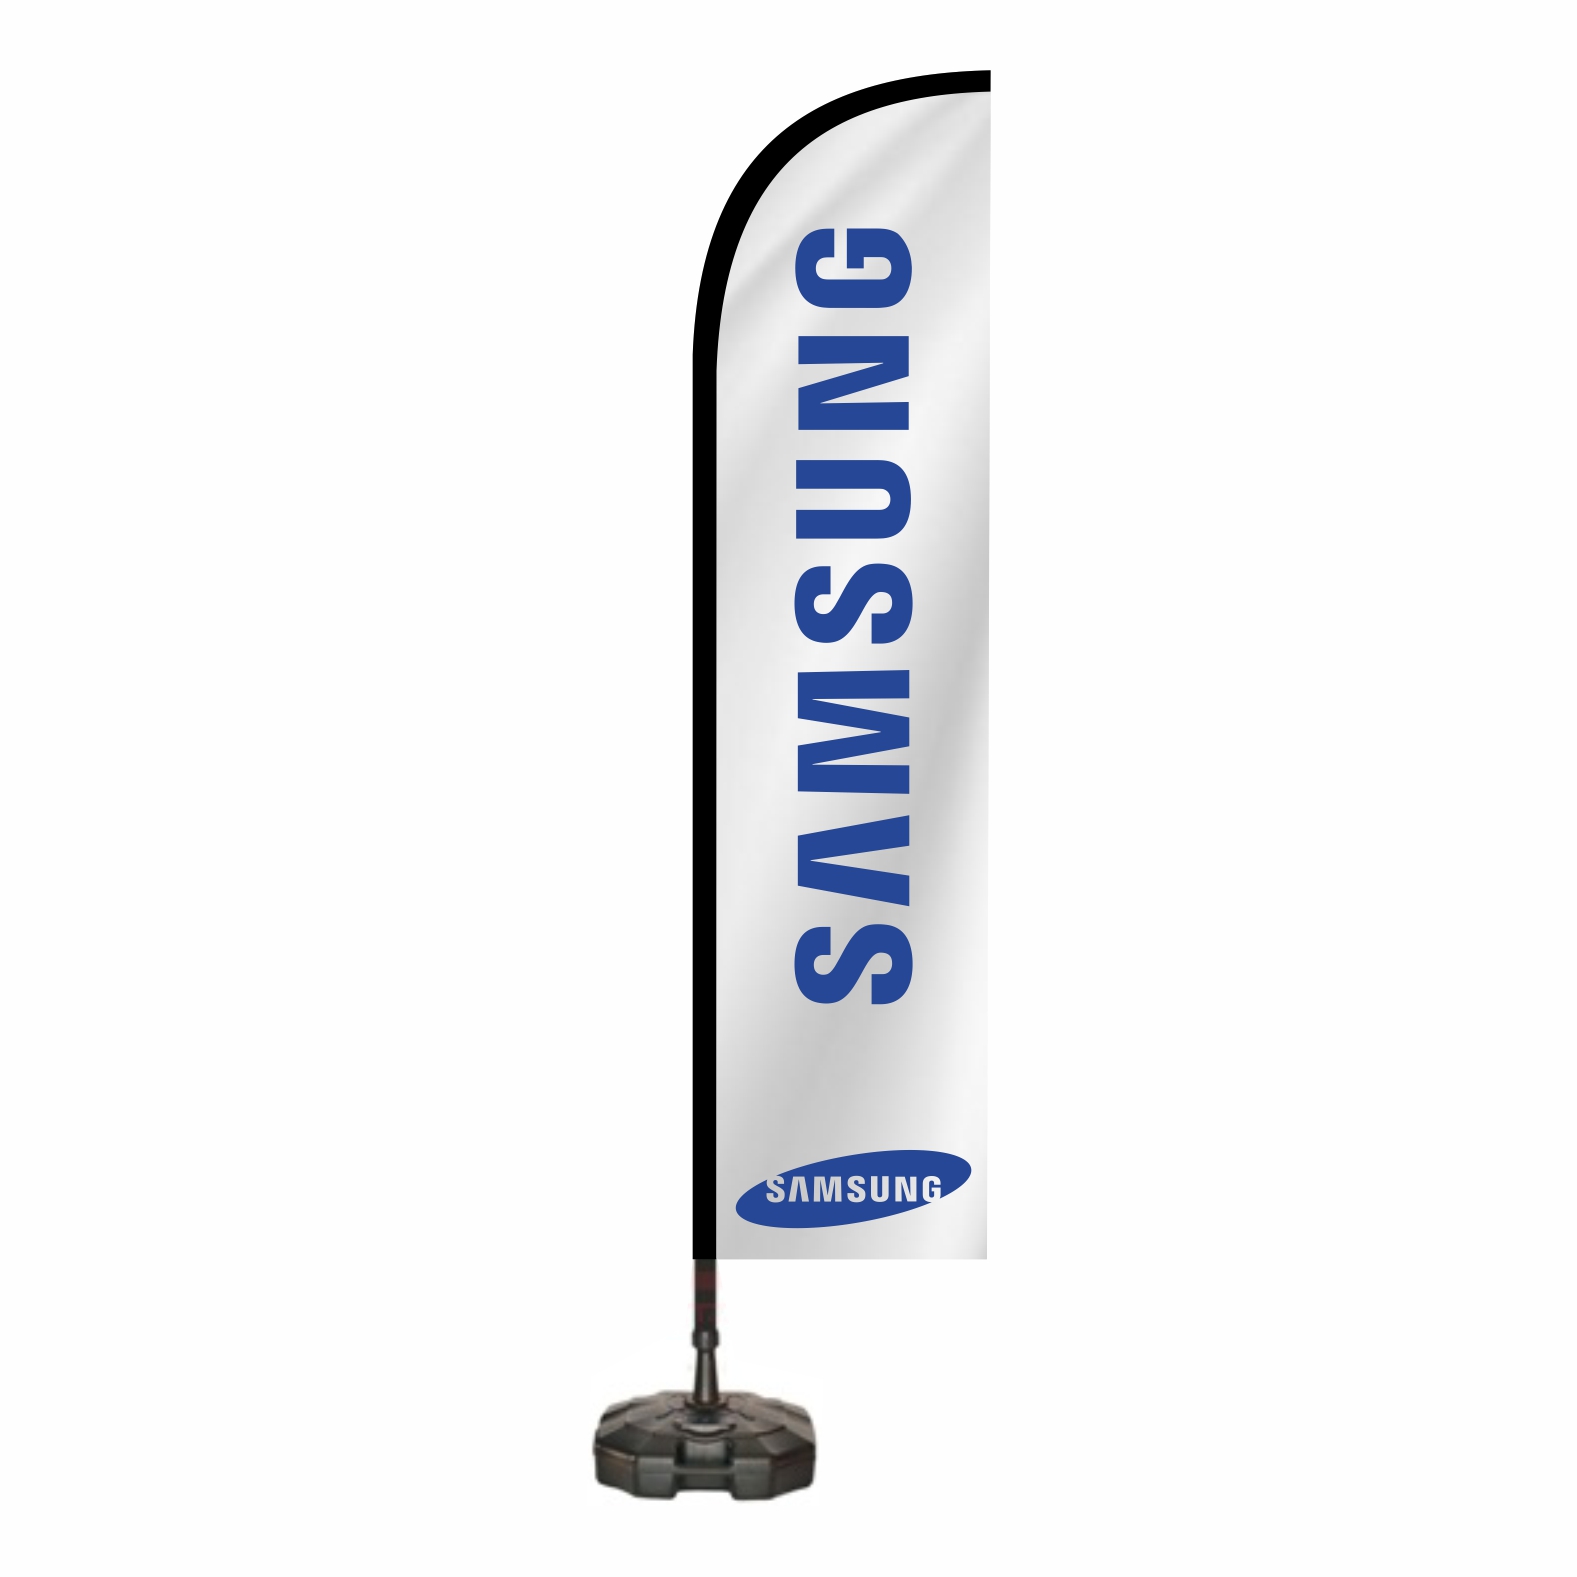 Samsung Plaj Bayraklar Fiyat